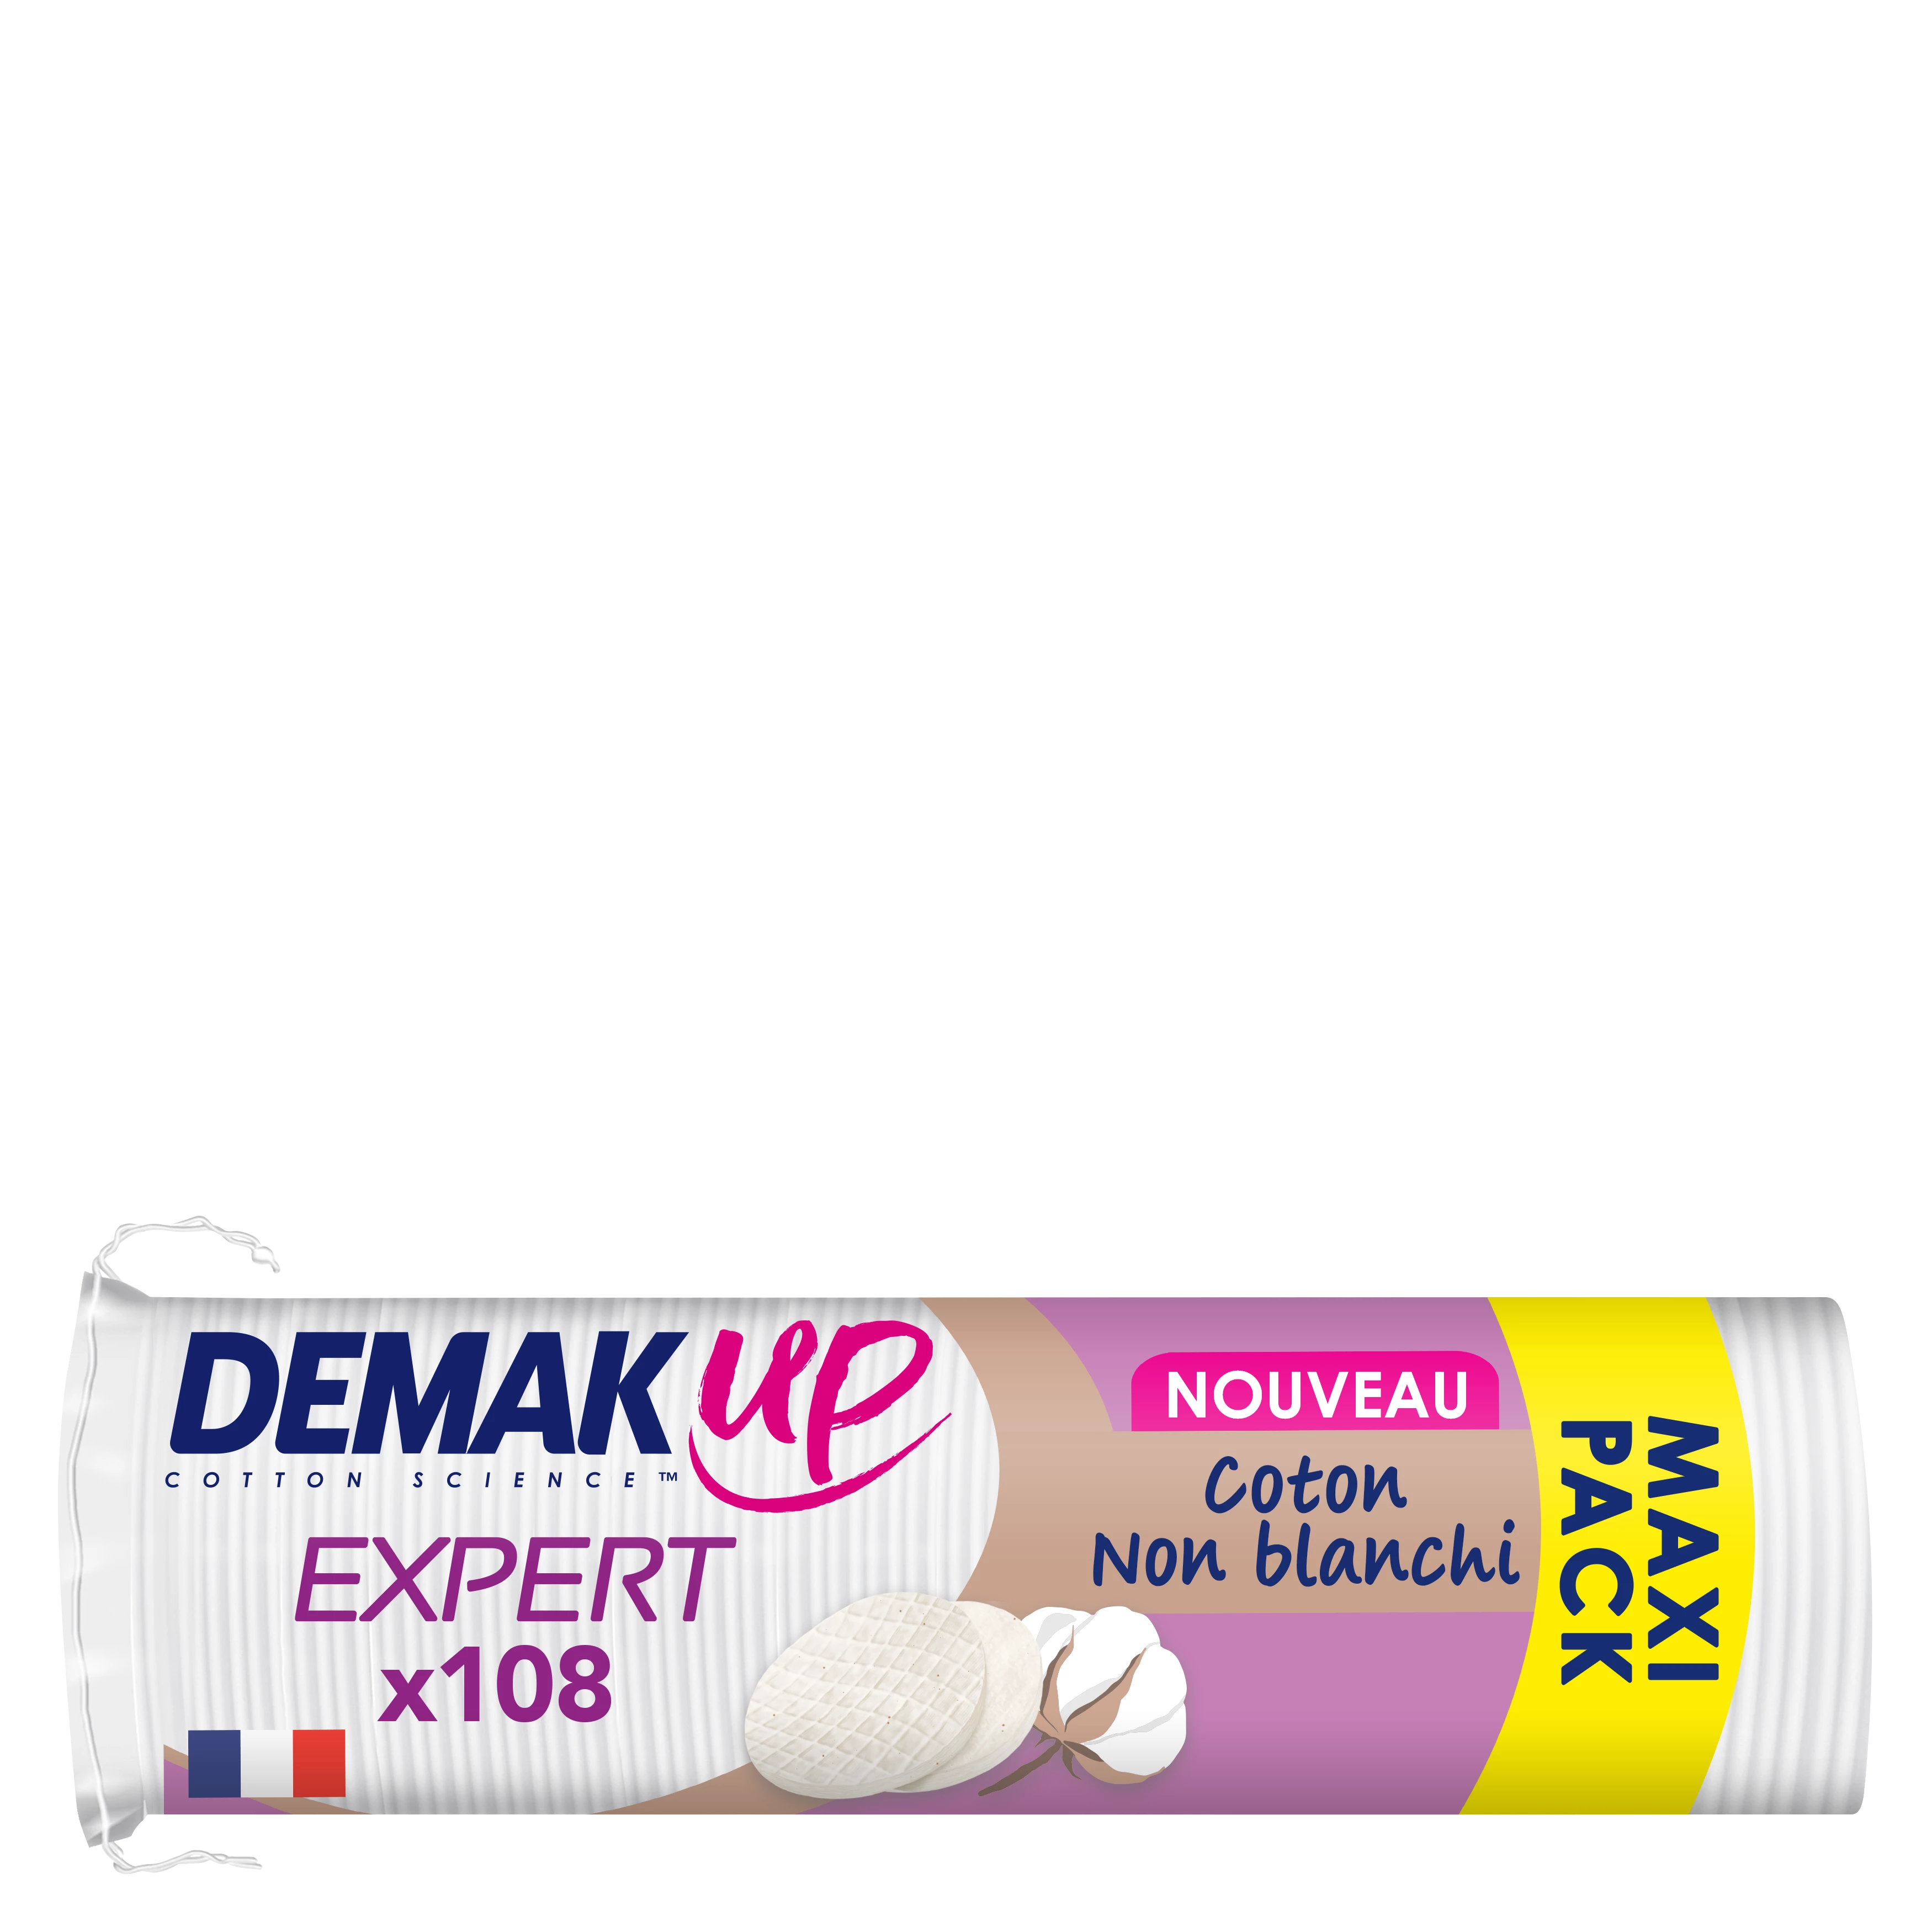 Подушечка для снятия макияжа Demakup Expert X108